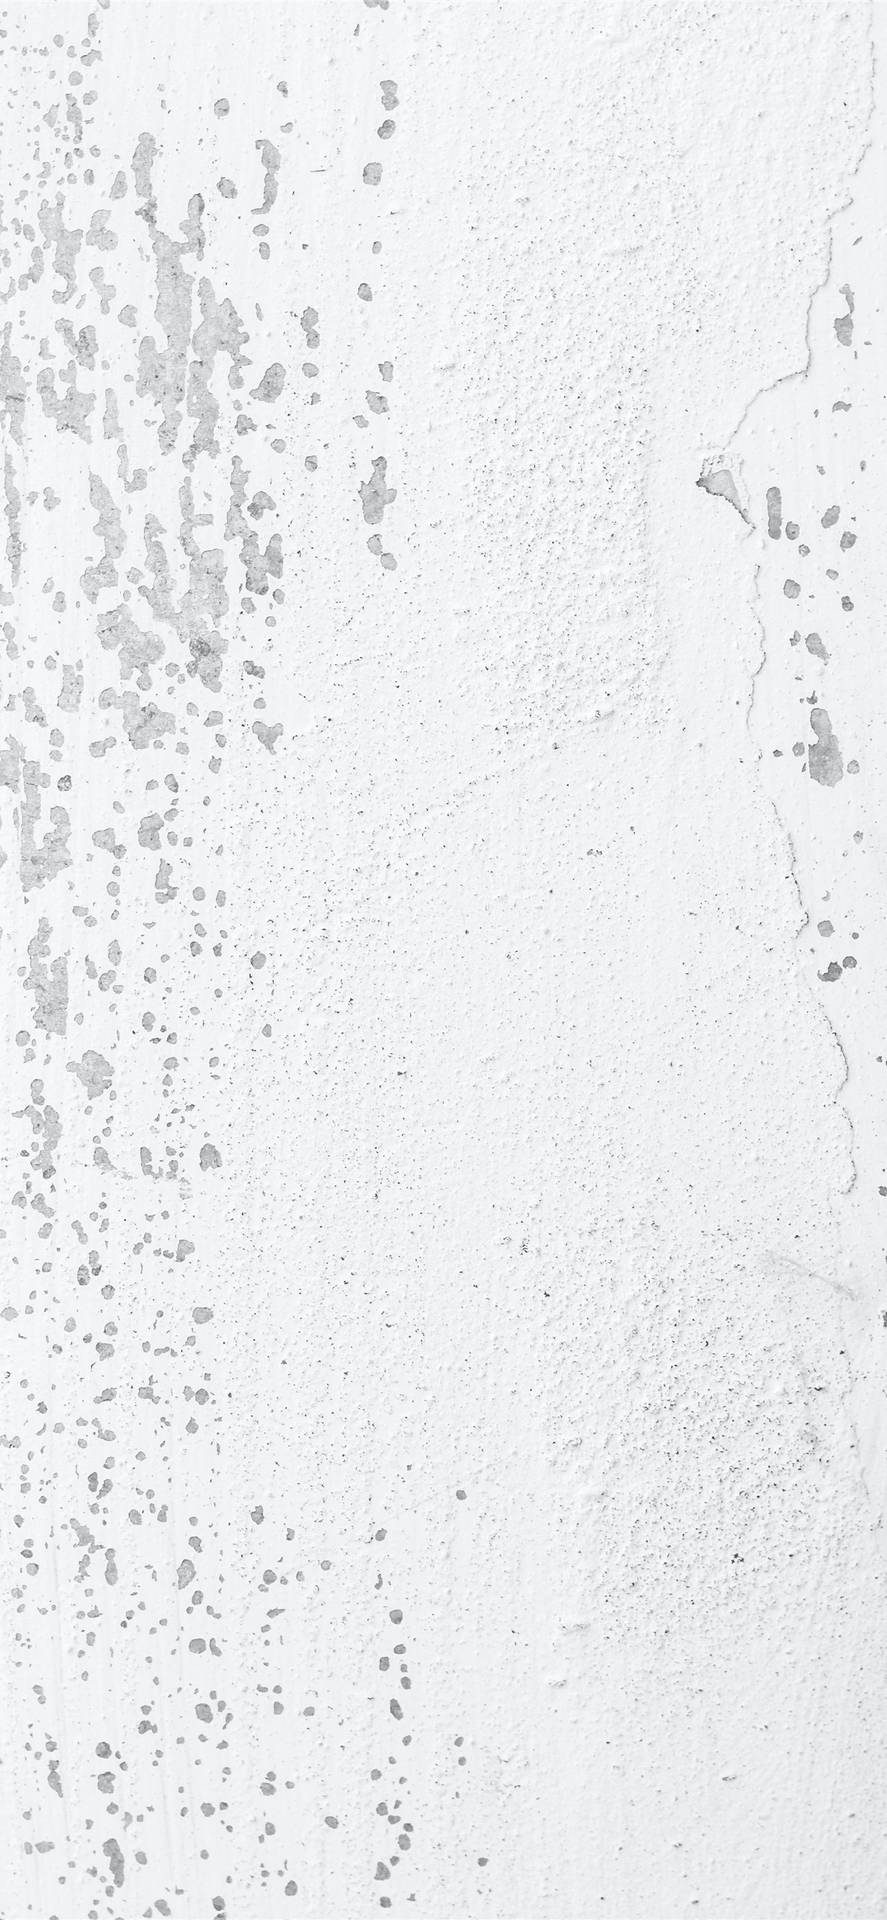 Peeling Paint Wall Texture Wallpaper